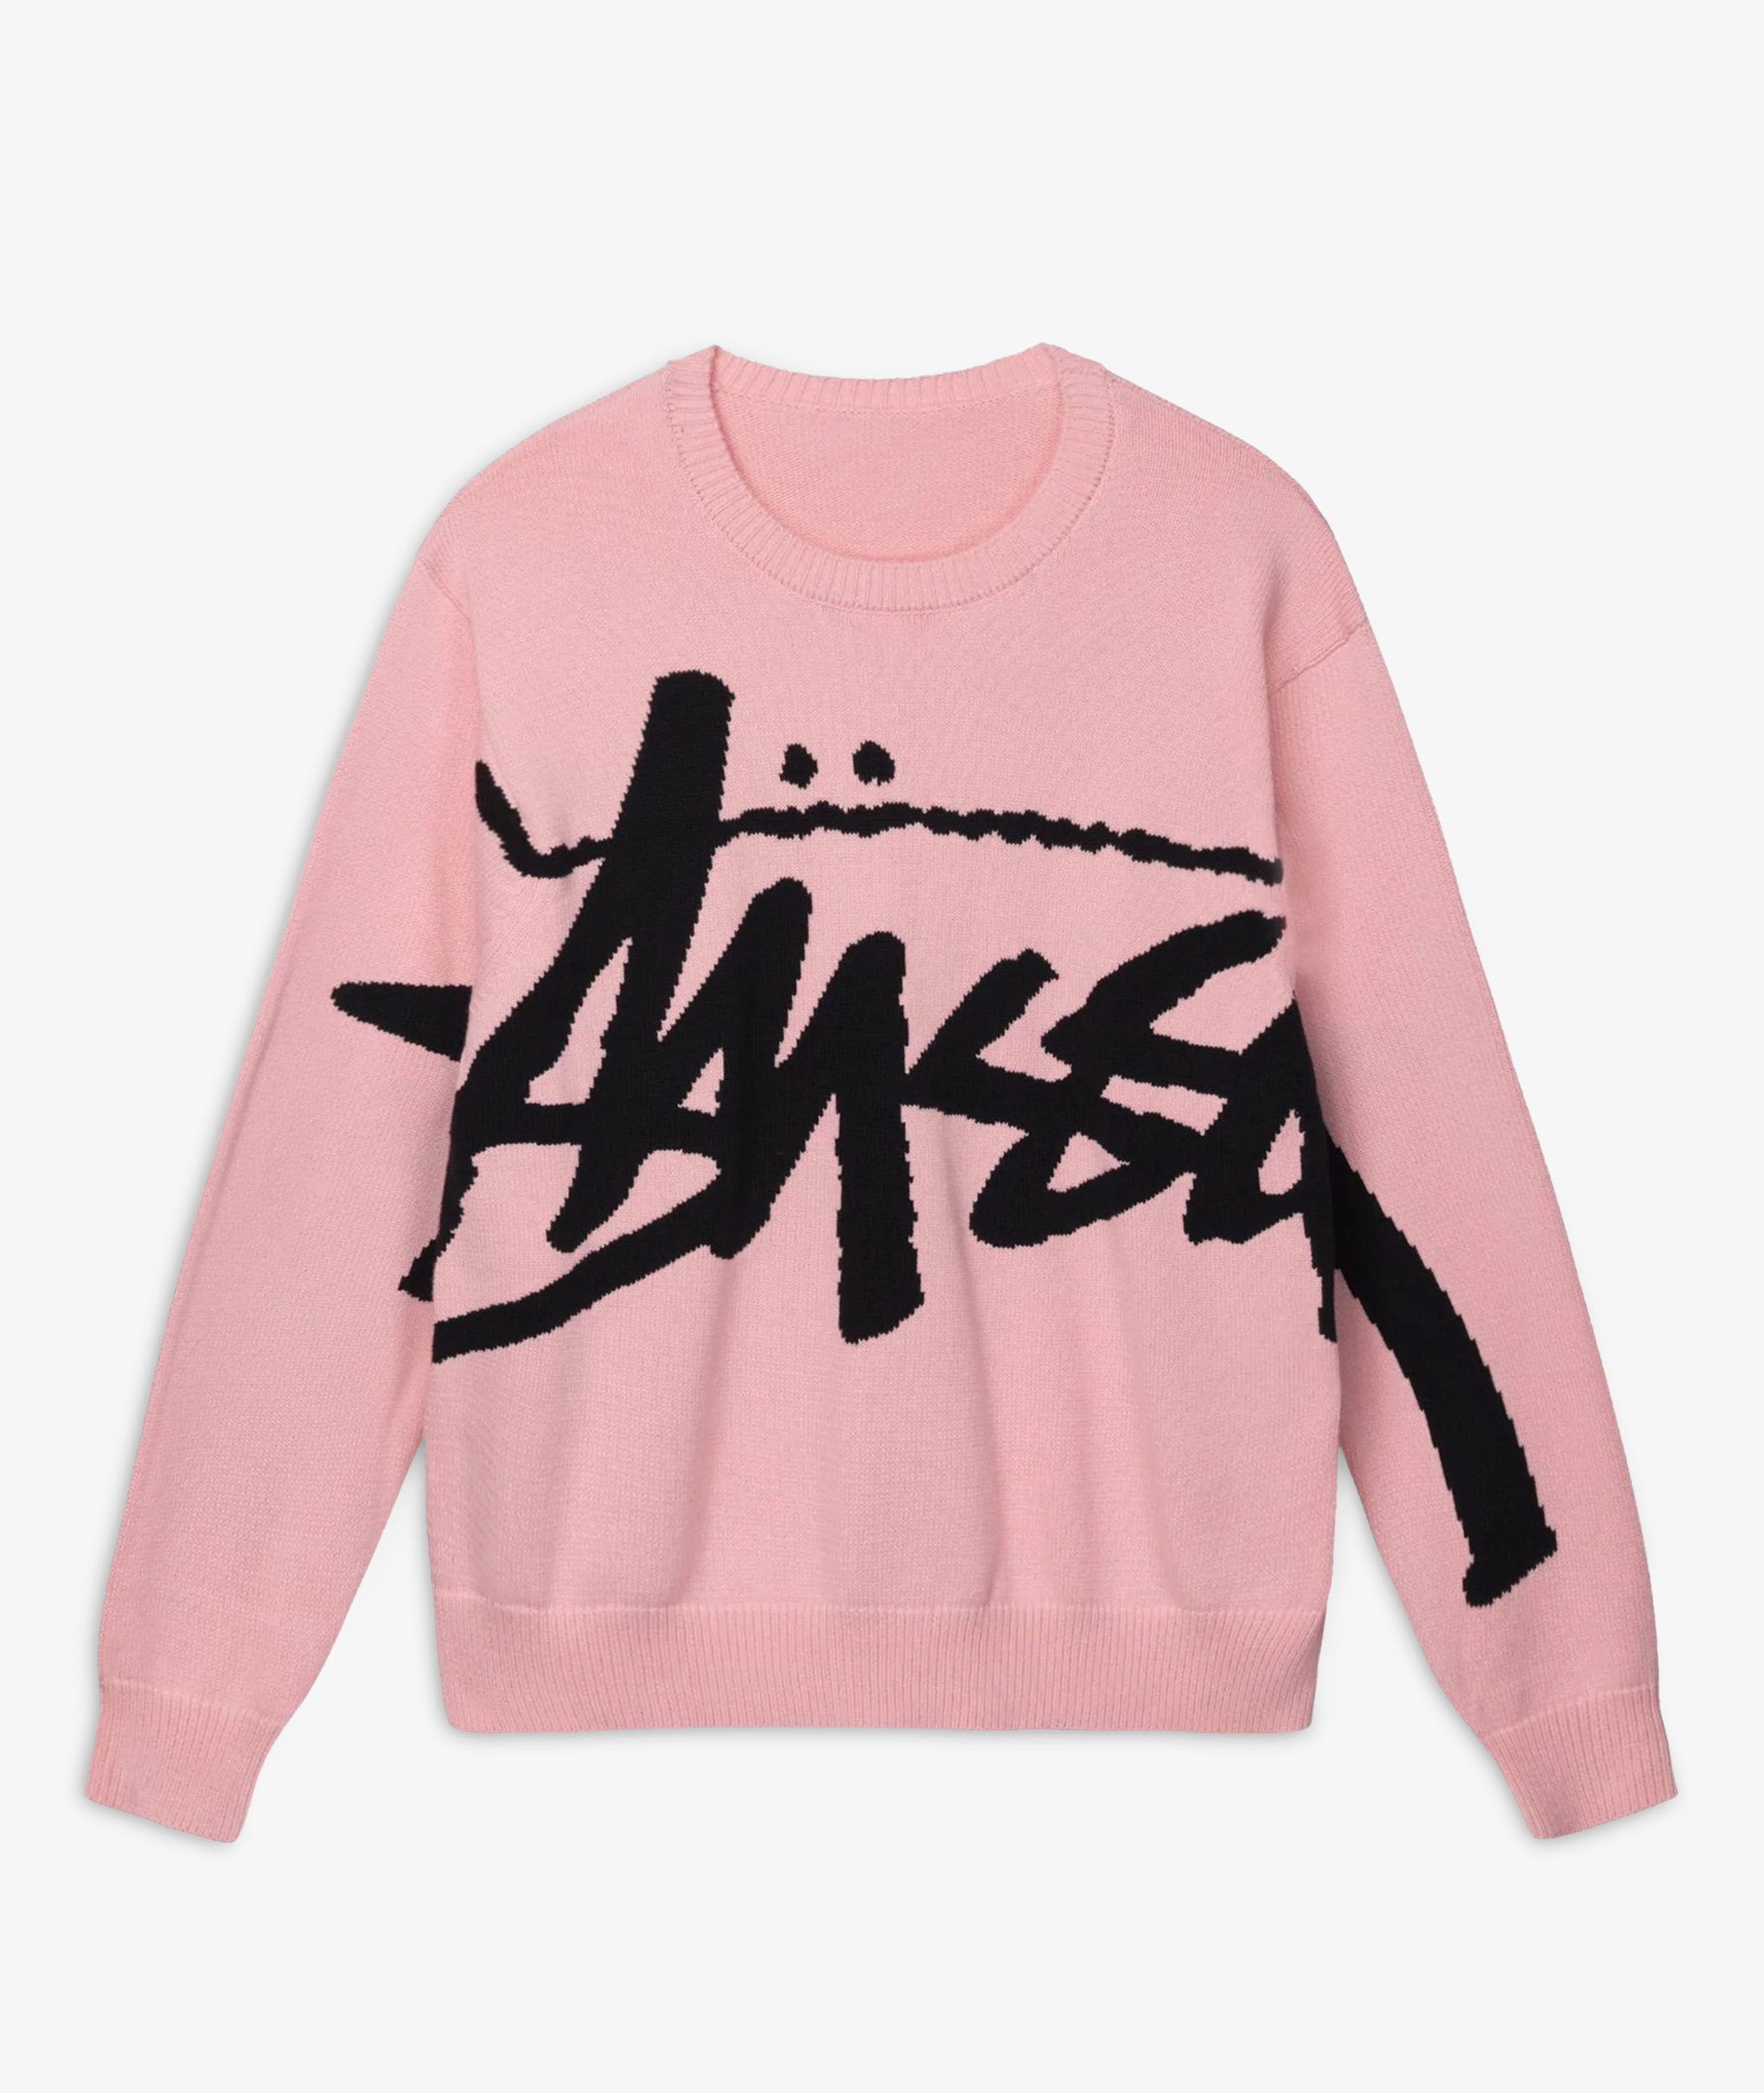 Norse Store  Shipping Worldwide - Stüssy Stock Sweater - Pink